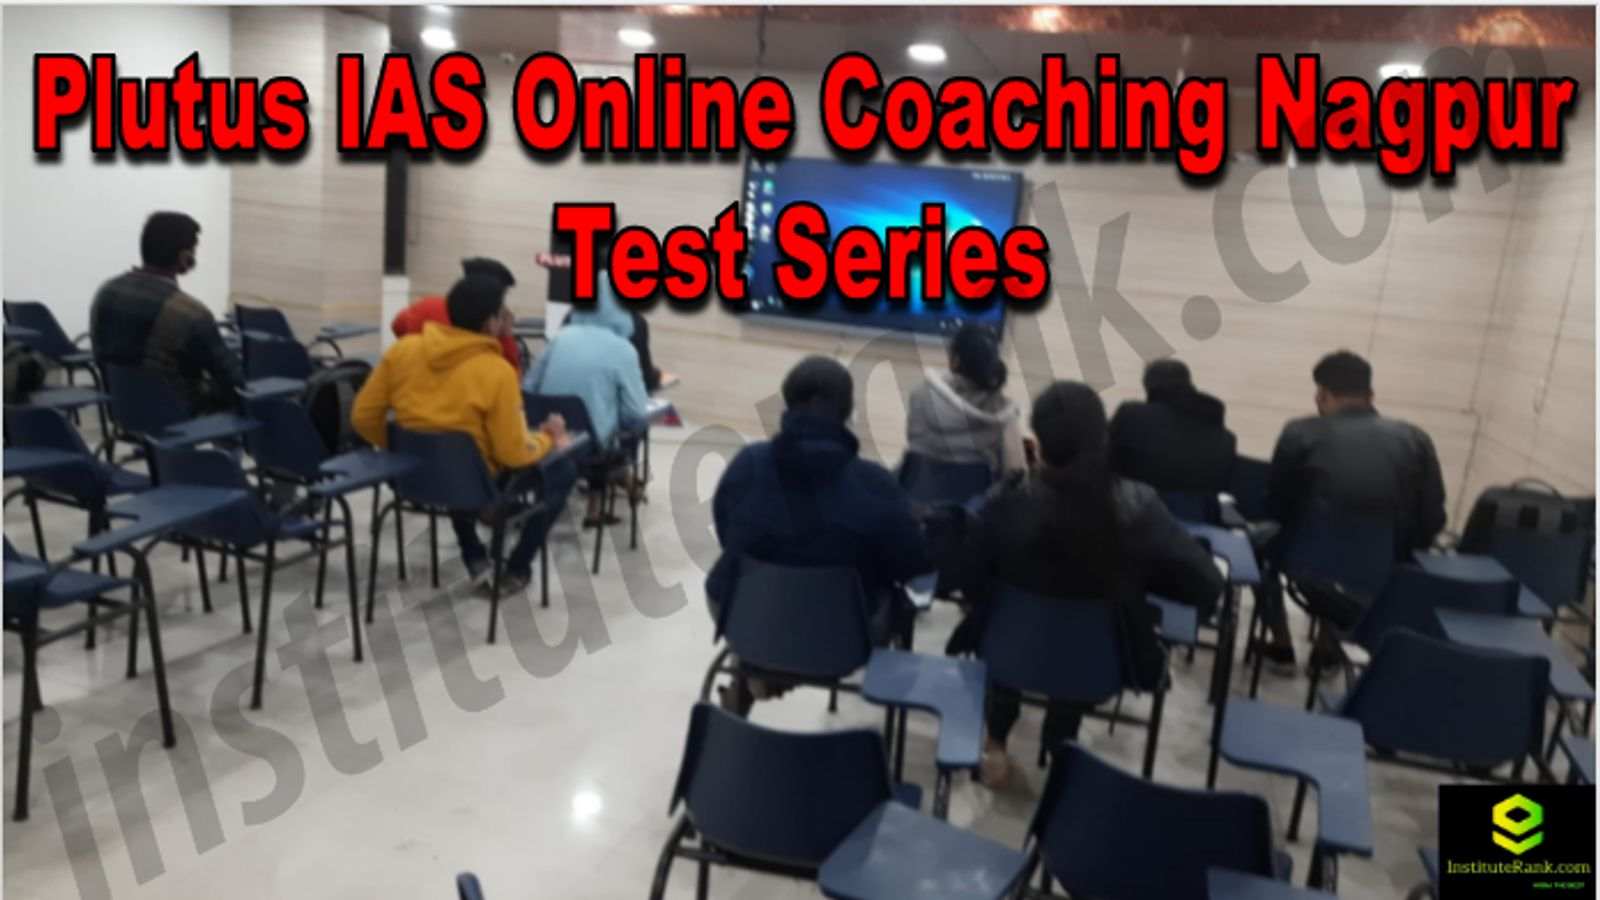 Plutus IAS Online Coaching Nagpur Reviews Test Series